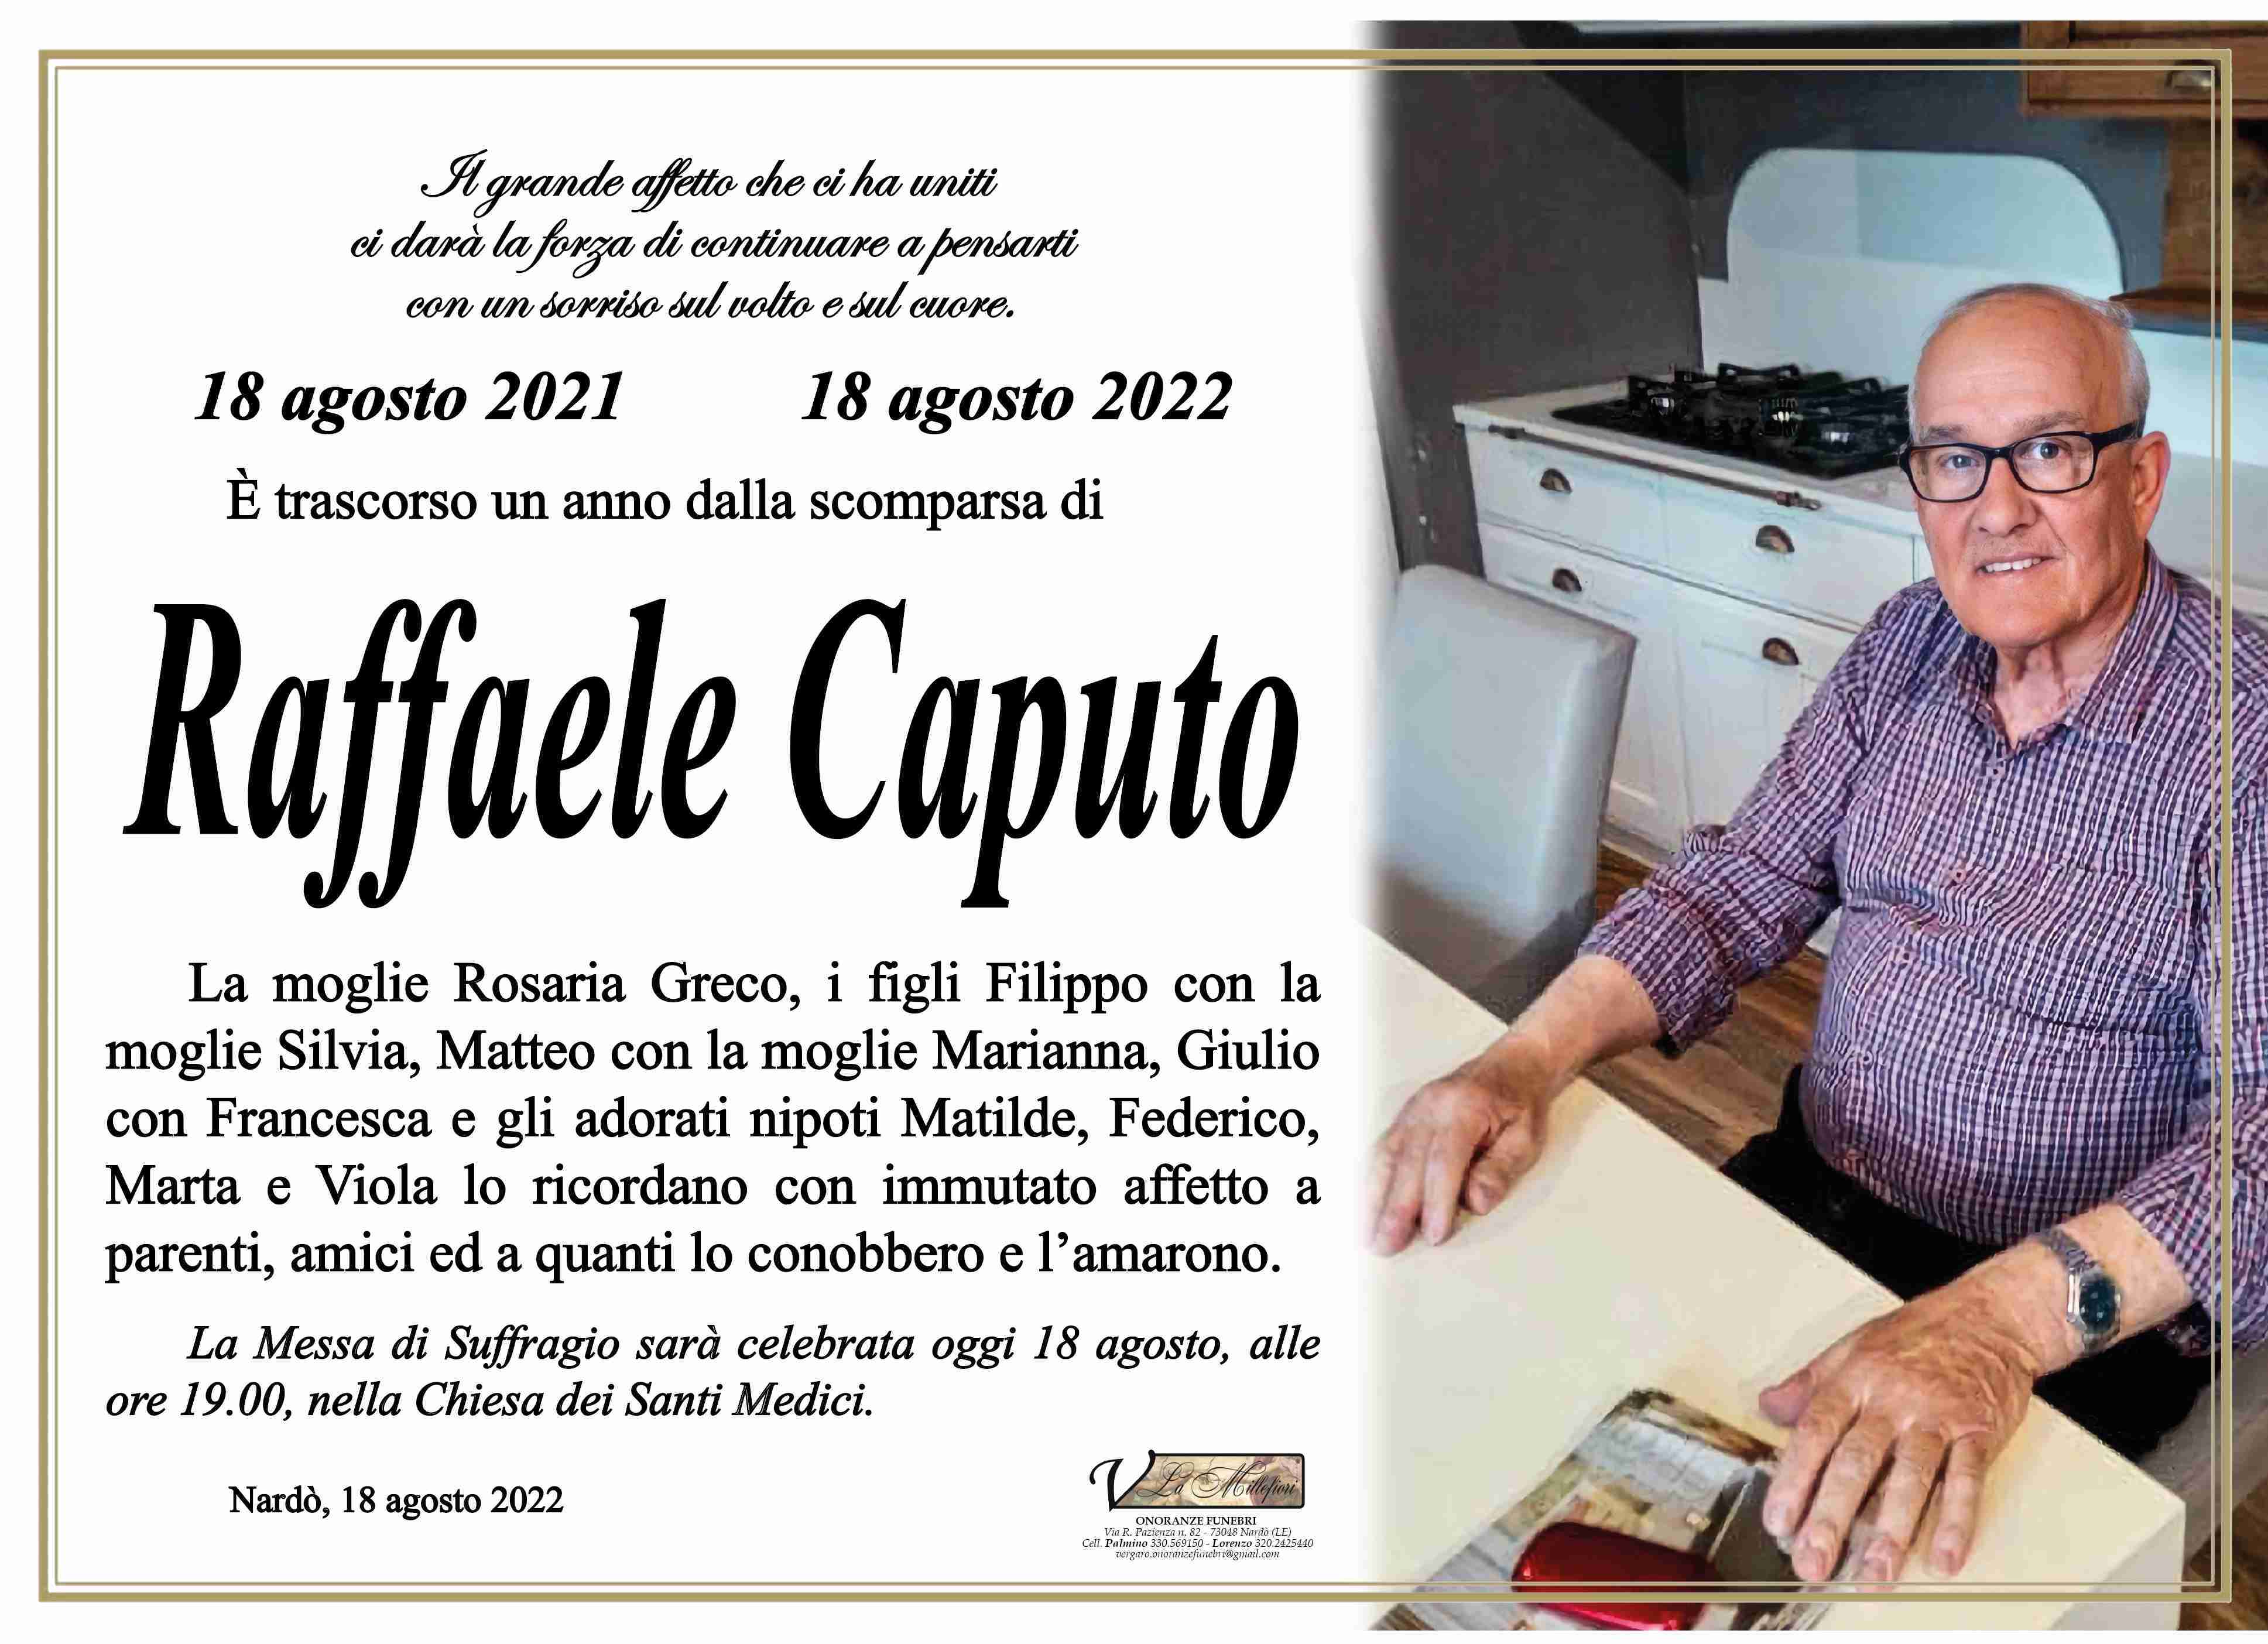 Raffaele Caputo